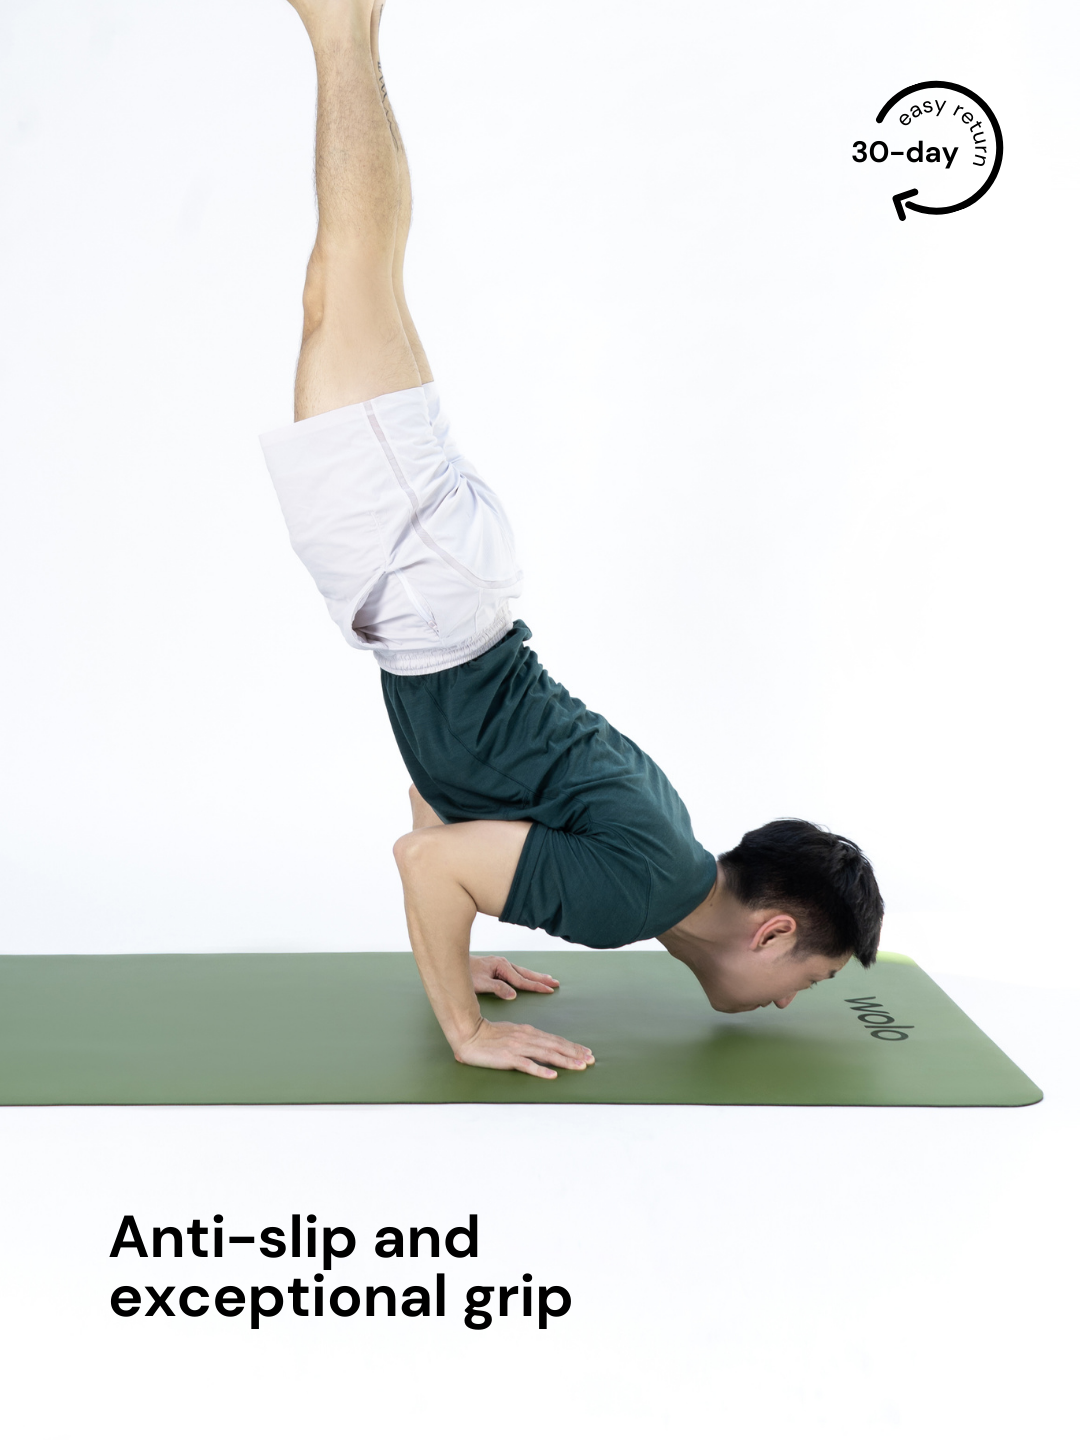 Man doing handstand on a sage green yoga mat